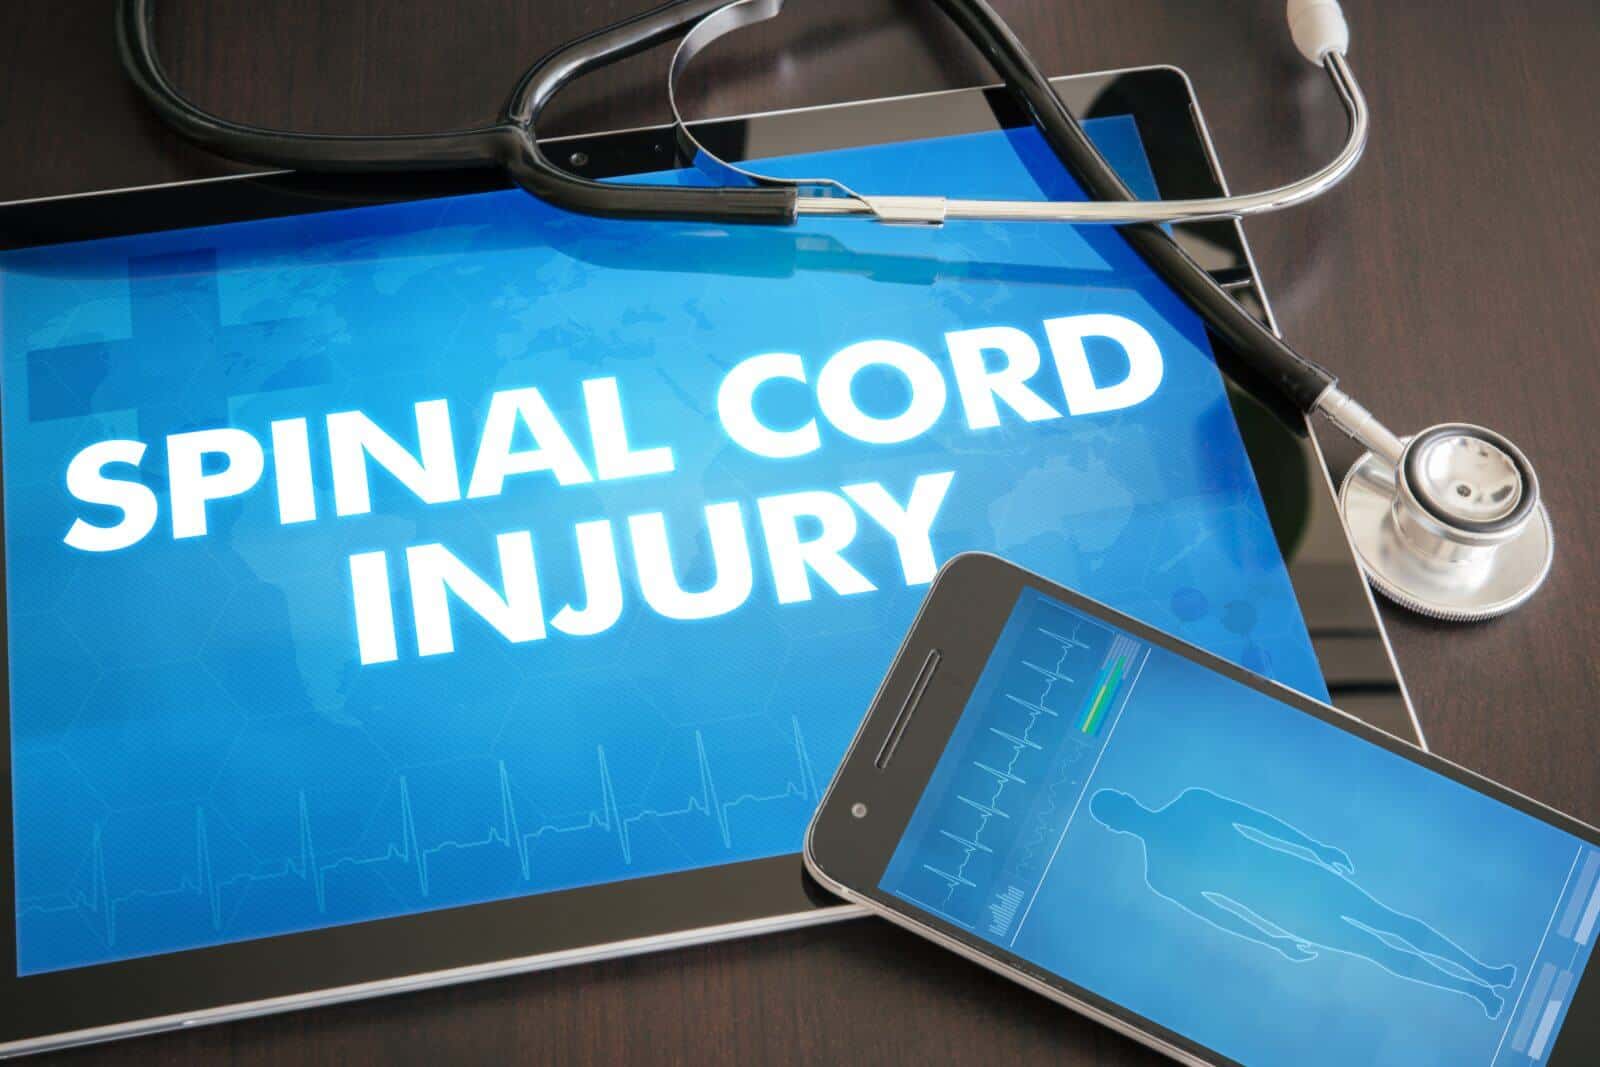 spinal cord injury sign on ipad